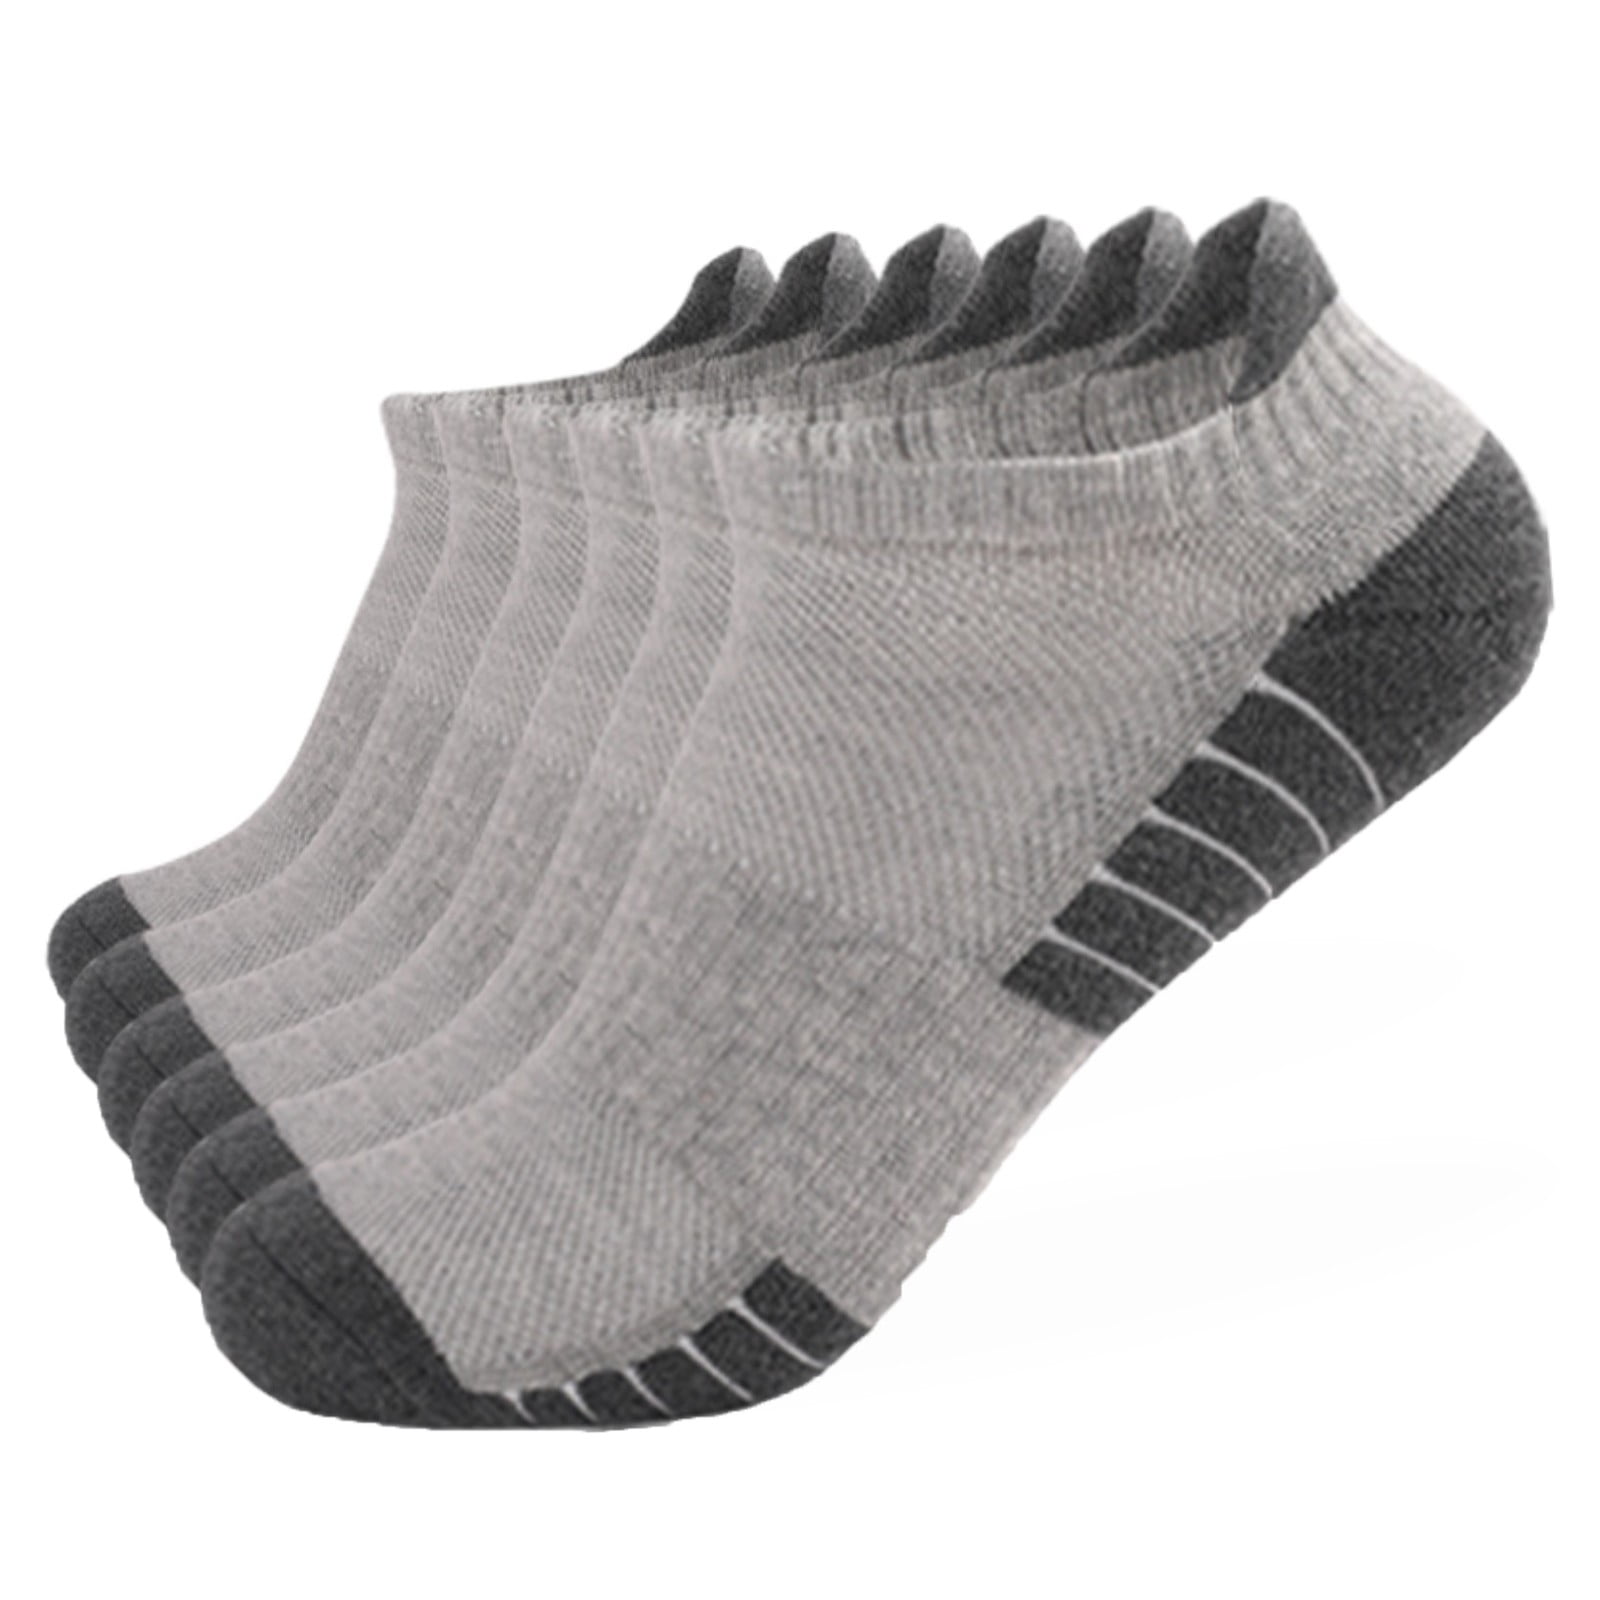 Womens Ankle Running Socks Athletic Low Cut Socks with Cushion Sport Socks 6 Pairs 